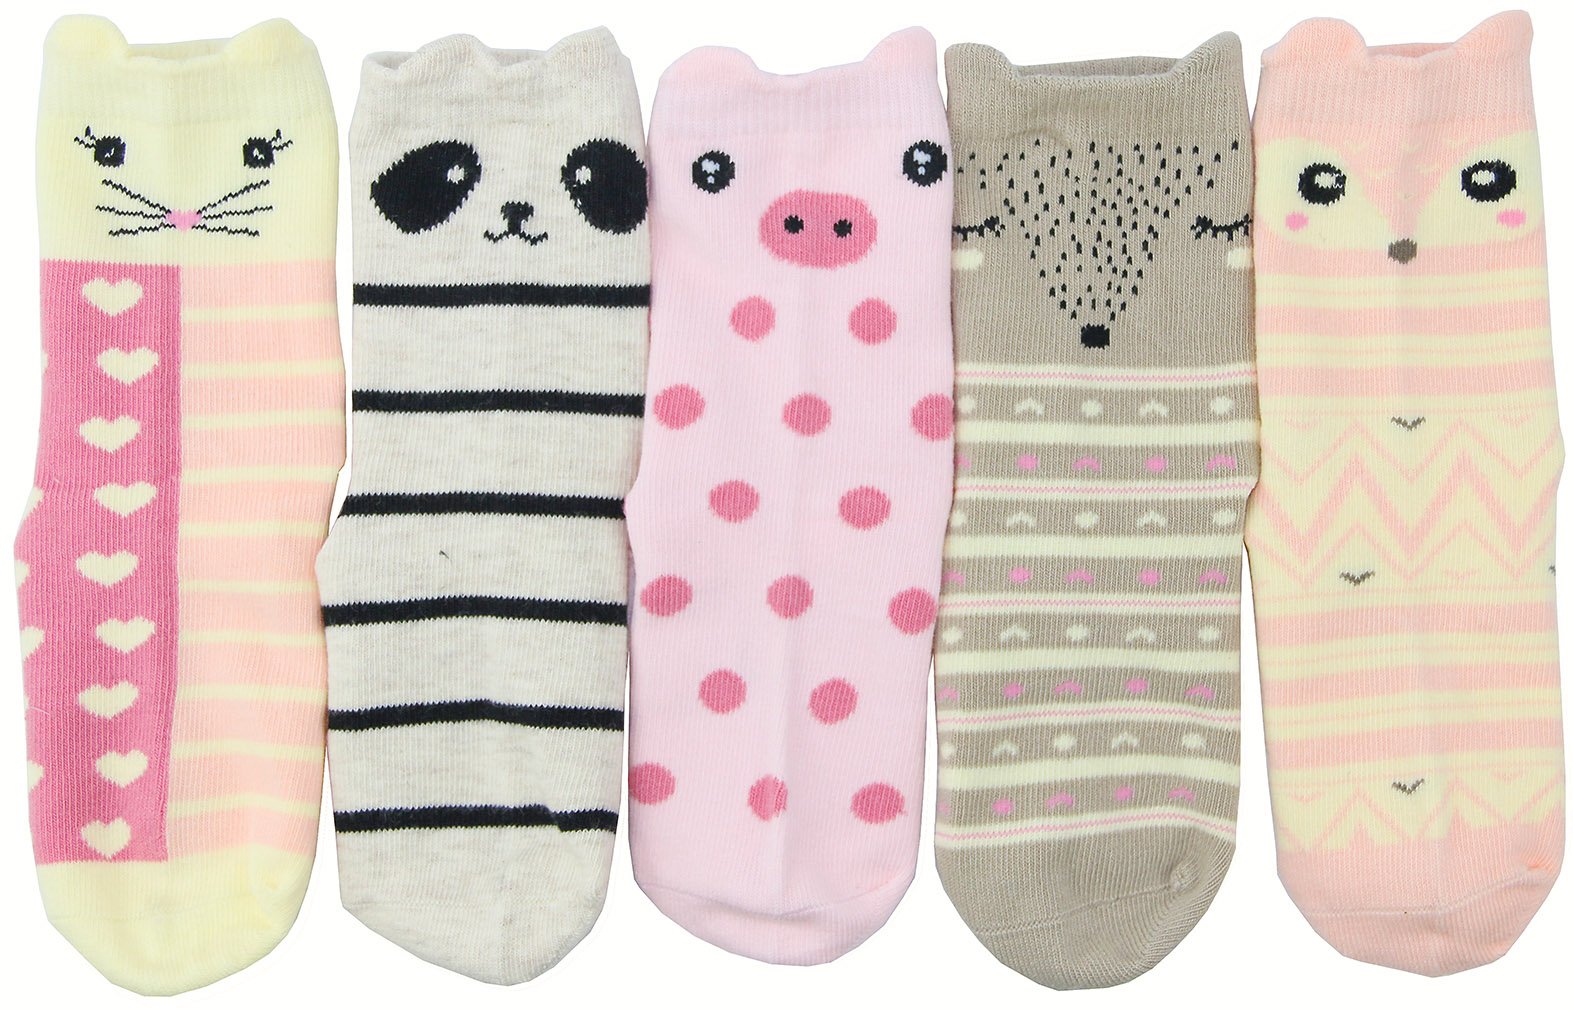 Hzcojulo Kids Toddler Big Little Girls Fashion Cotton Crew Cute Socks -5 Pairs